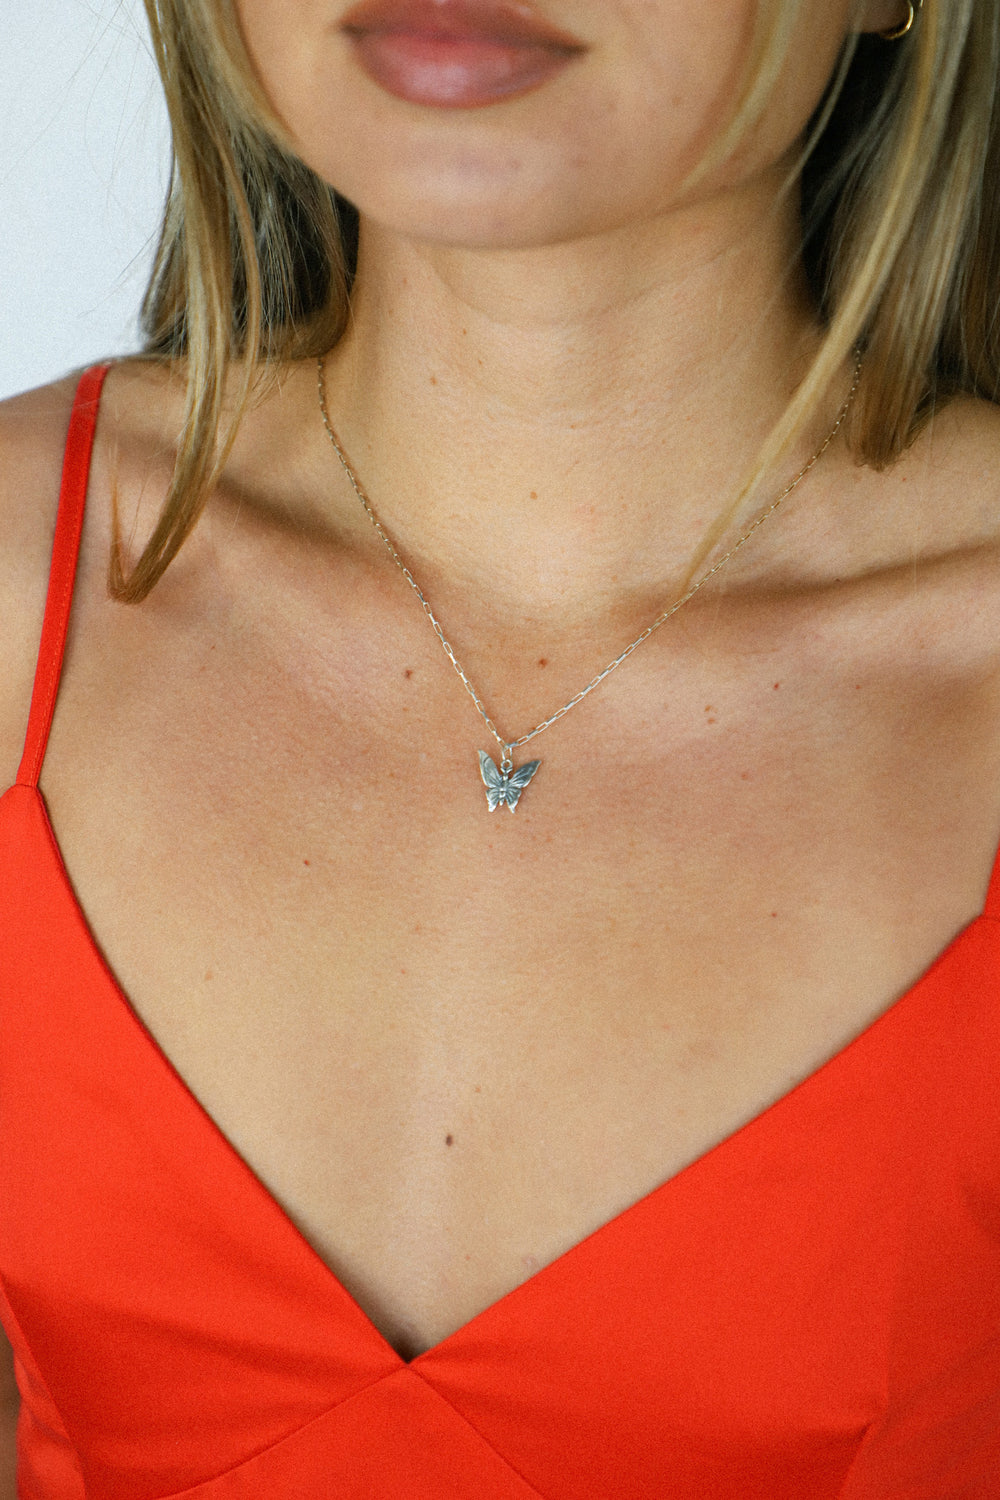 Silver Mariposa Necklace